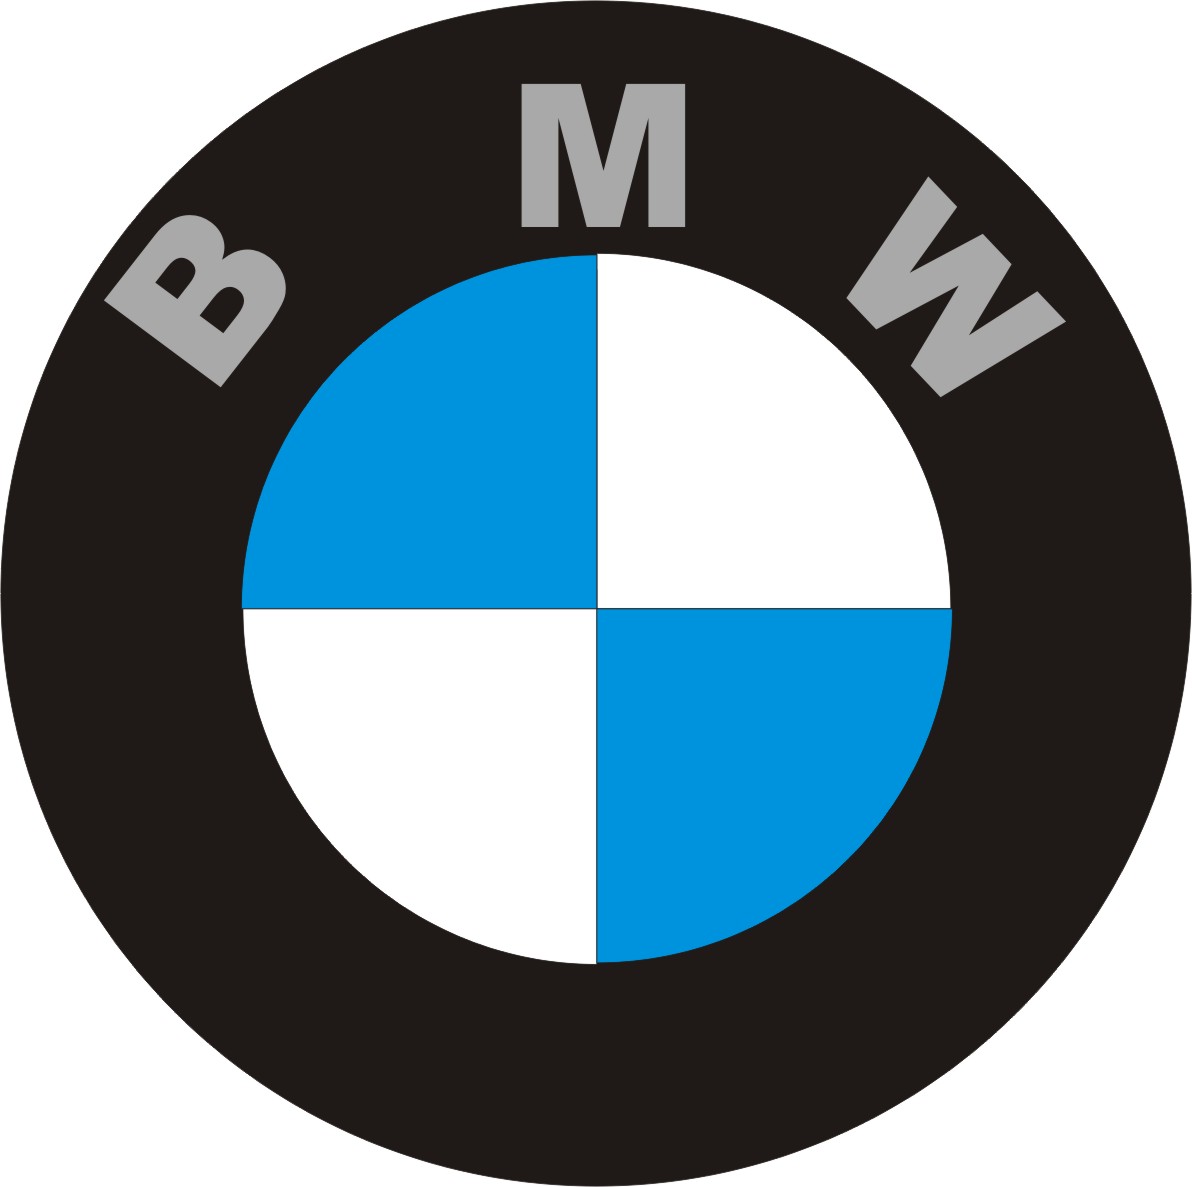 bmw logo clipart free - photo #25